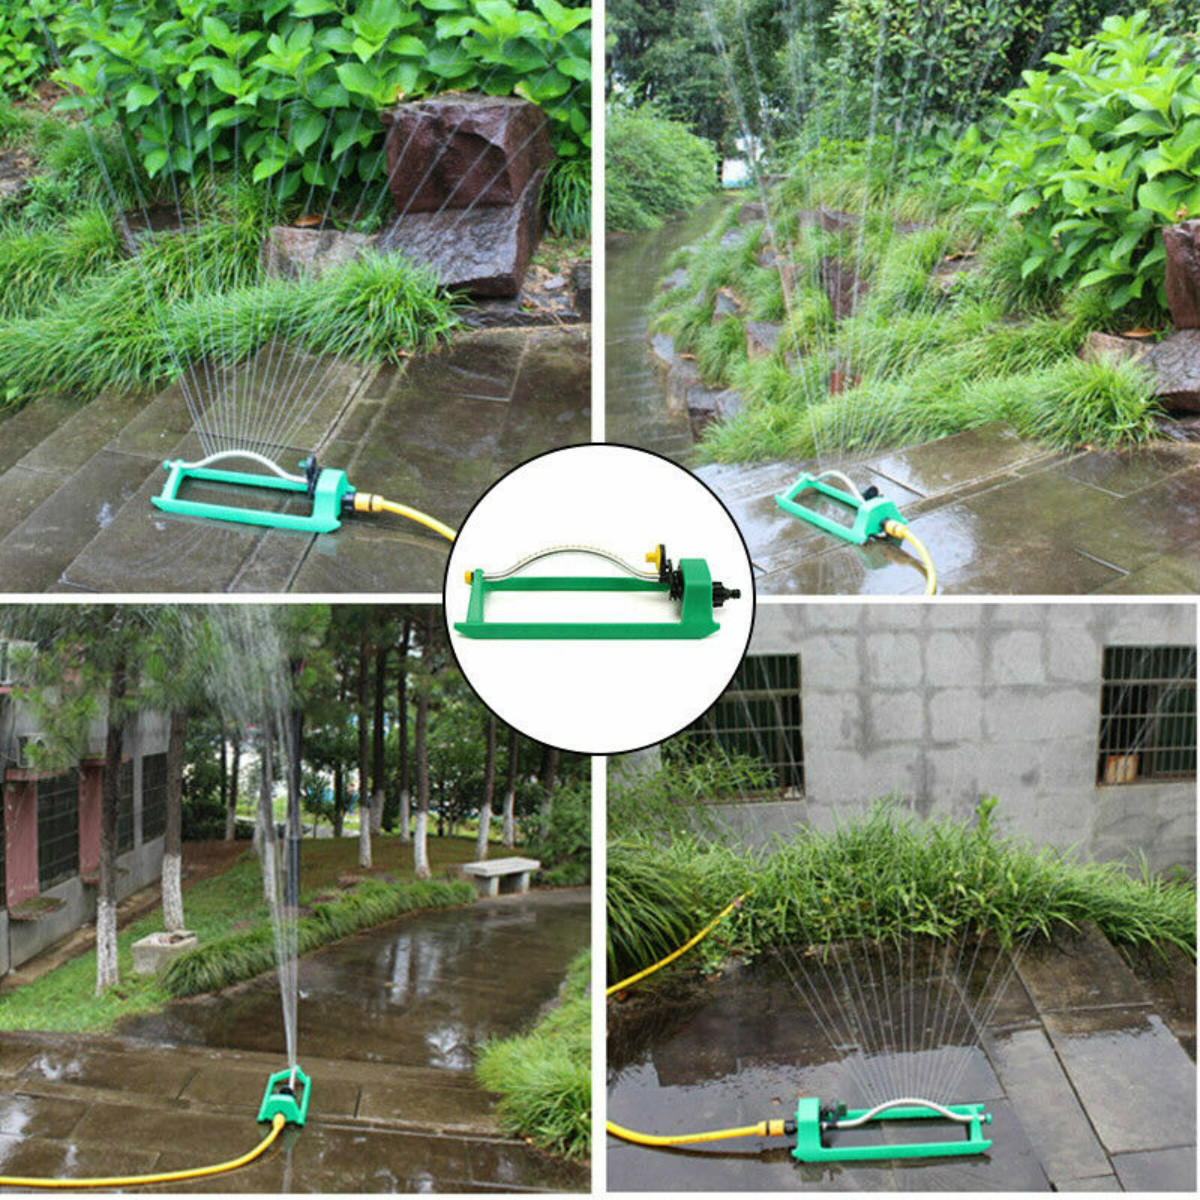 Outdoor-Garden-Grass-18-hole-Adjustable-Oscillating-Sprinkler-Water-Lawn-Nozzle-1723674